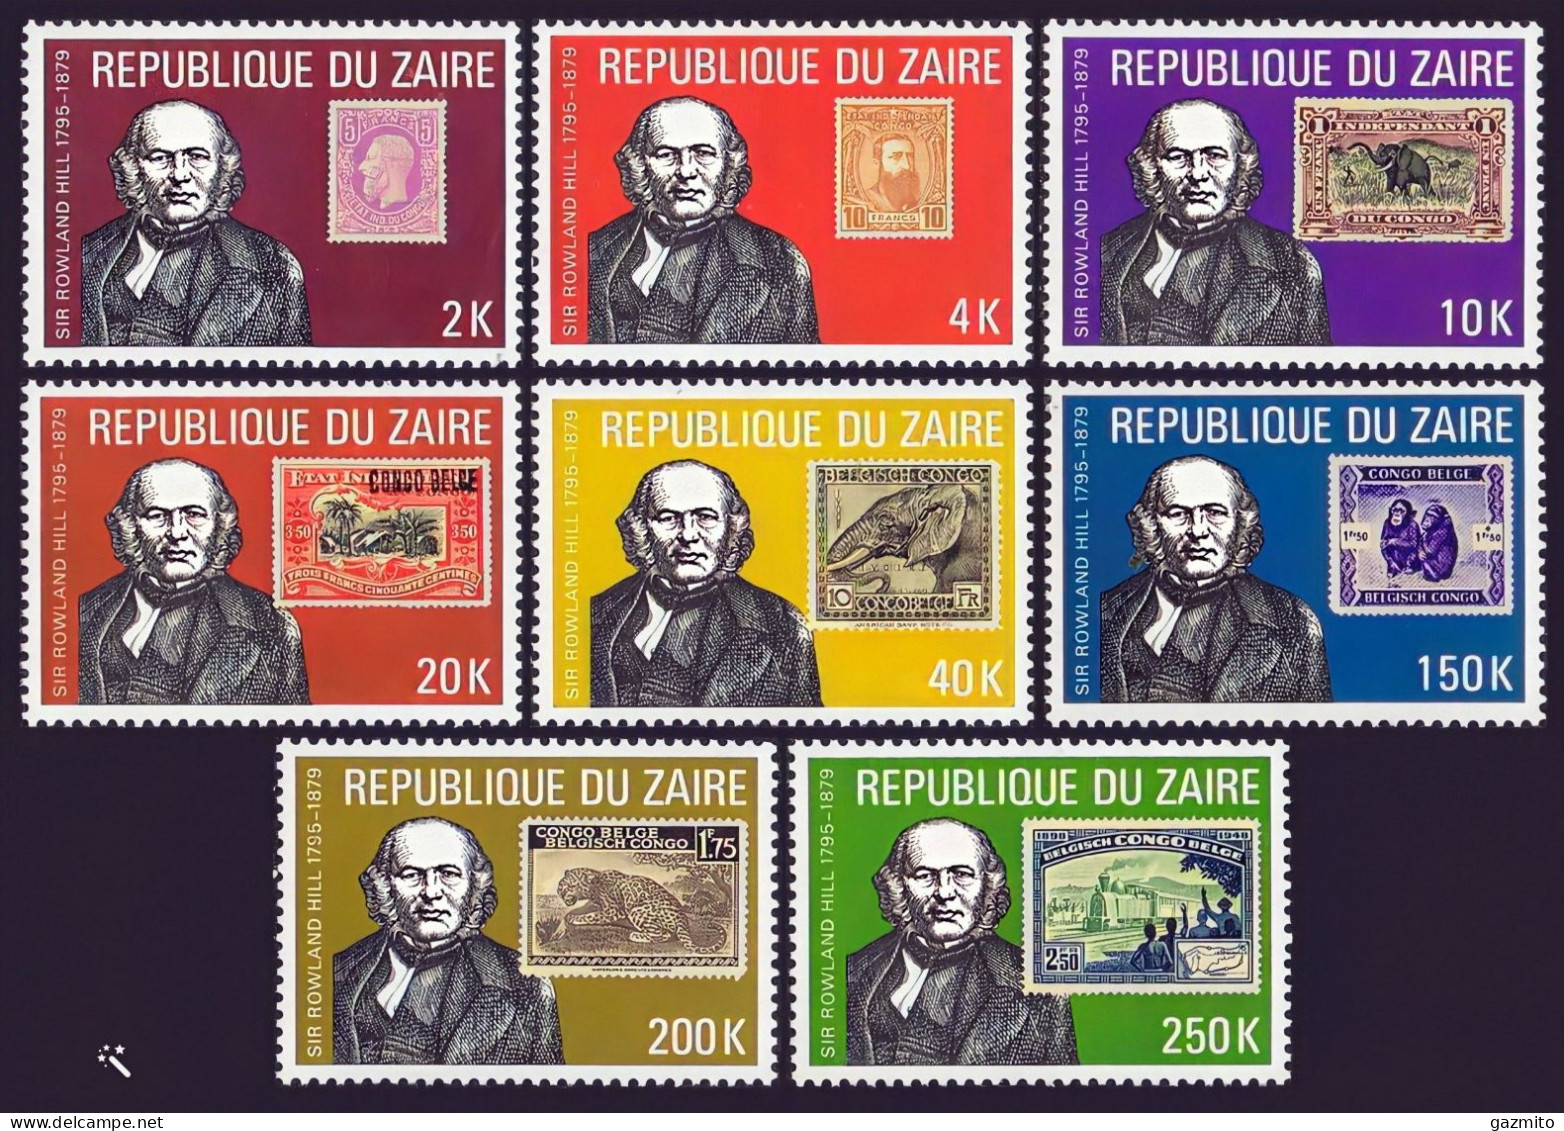 Zaire 1980, Rowland Hill, Stamp On Stamp, Wild Cat, Monkey, Elephant, 8val - Elefanten